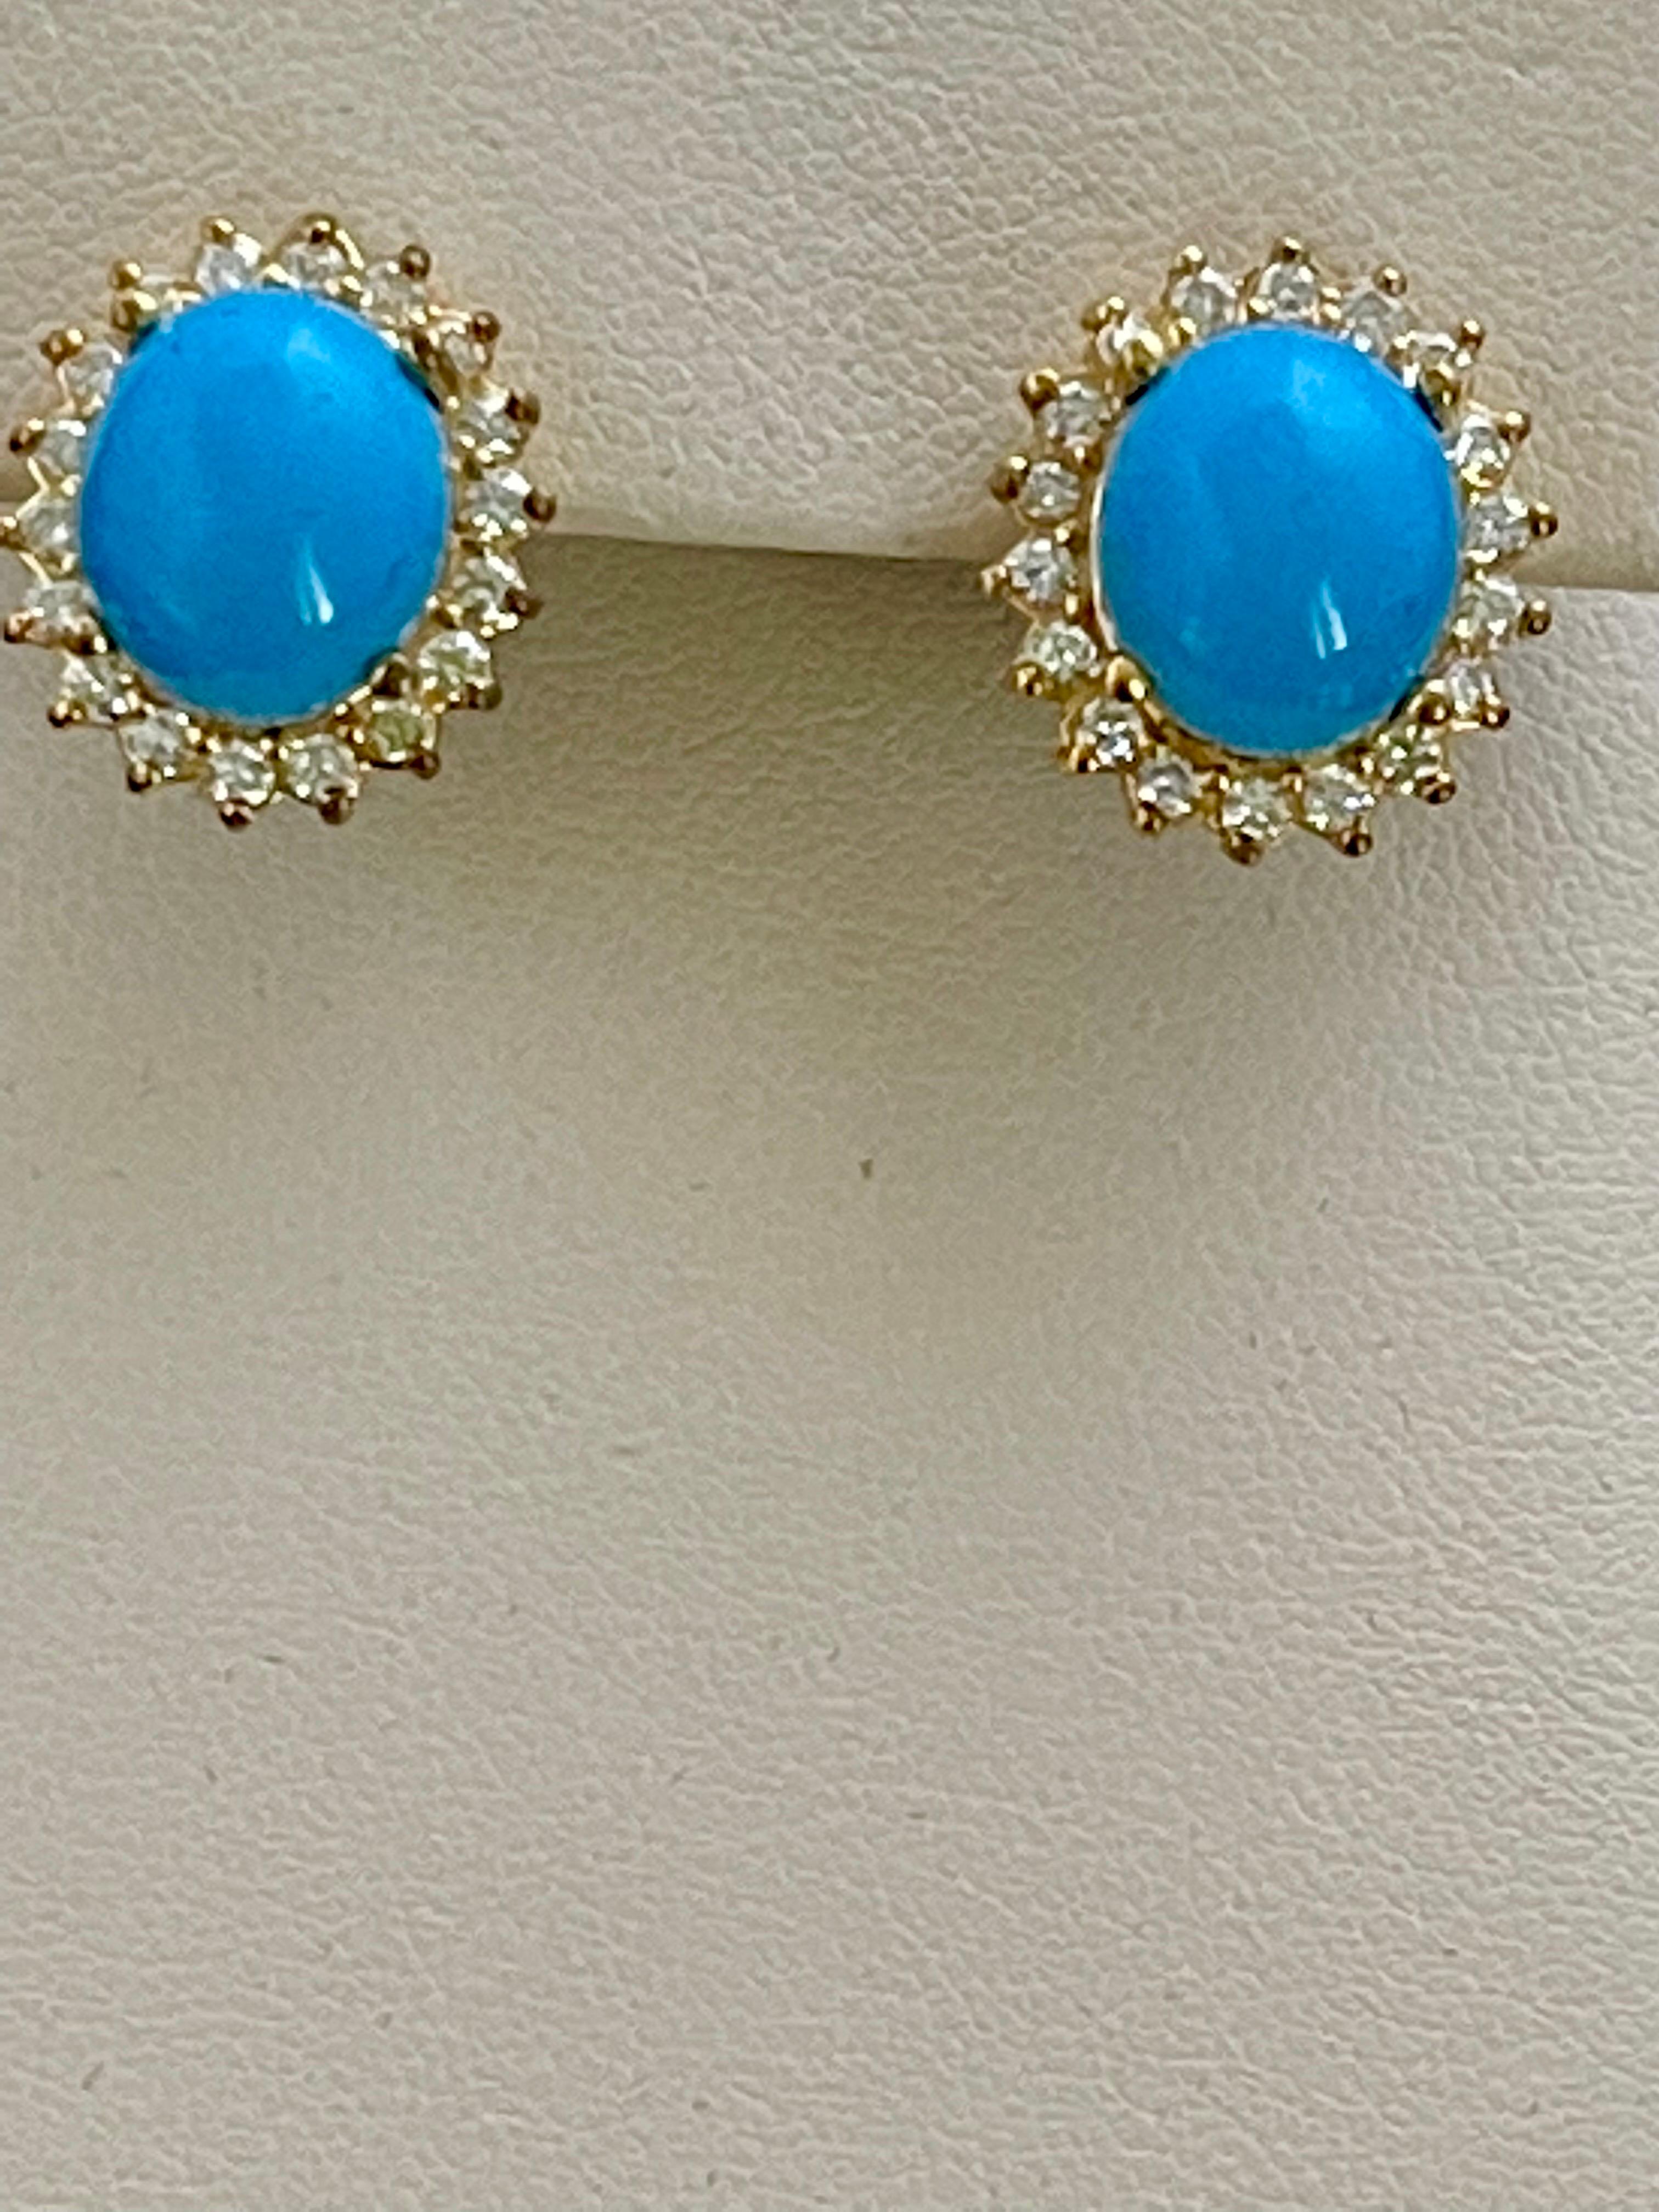 8 Ct Oval Sleeping Beauty Turquoise 1.5ct Diamond Stud Earrings 14 K Yellow Gold For Sale 3